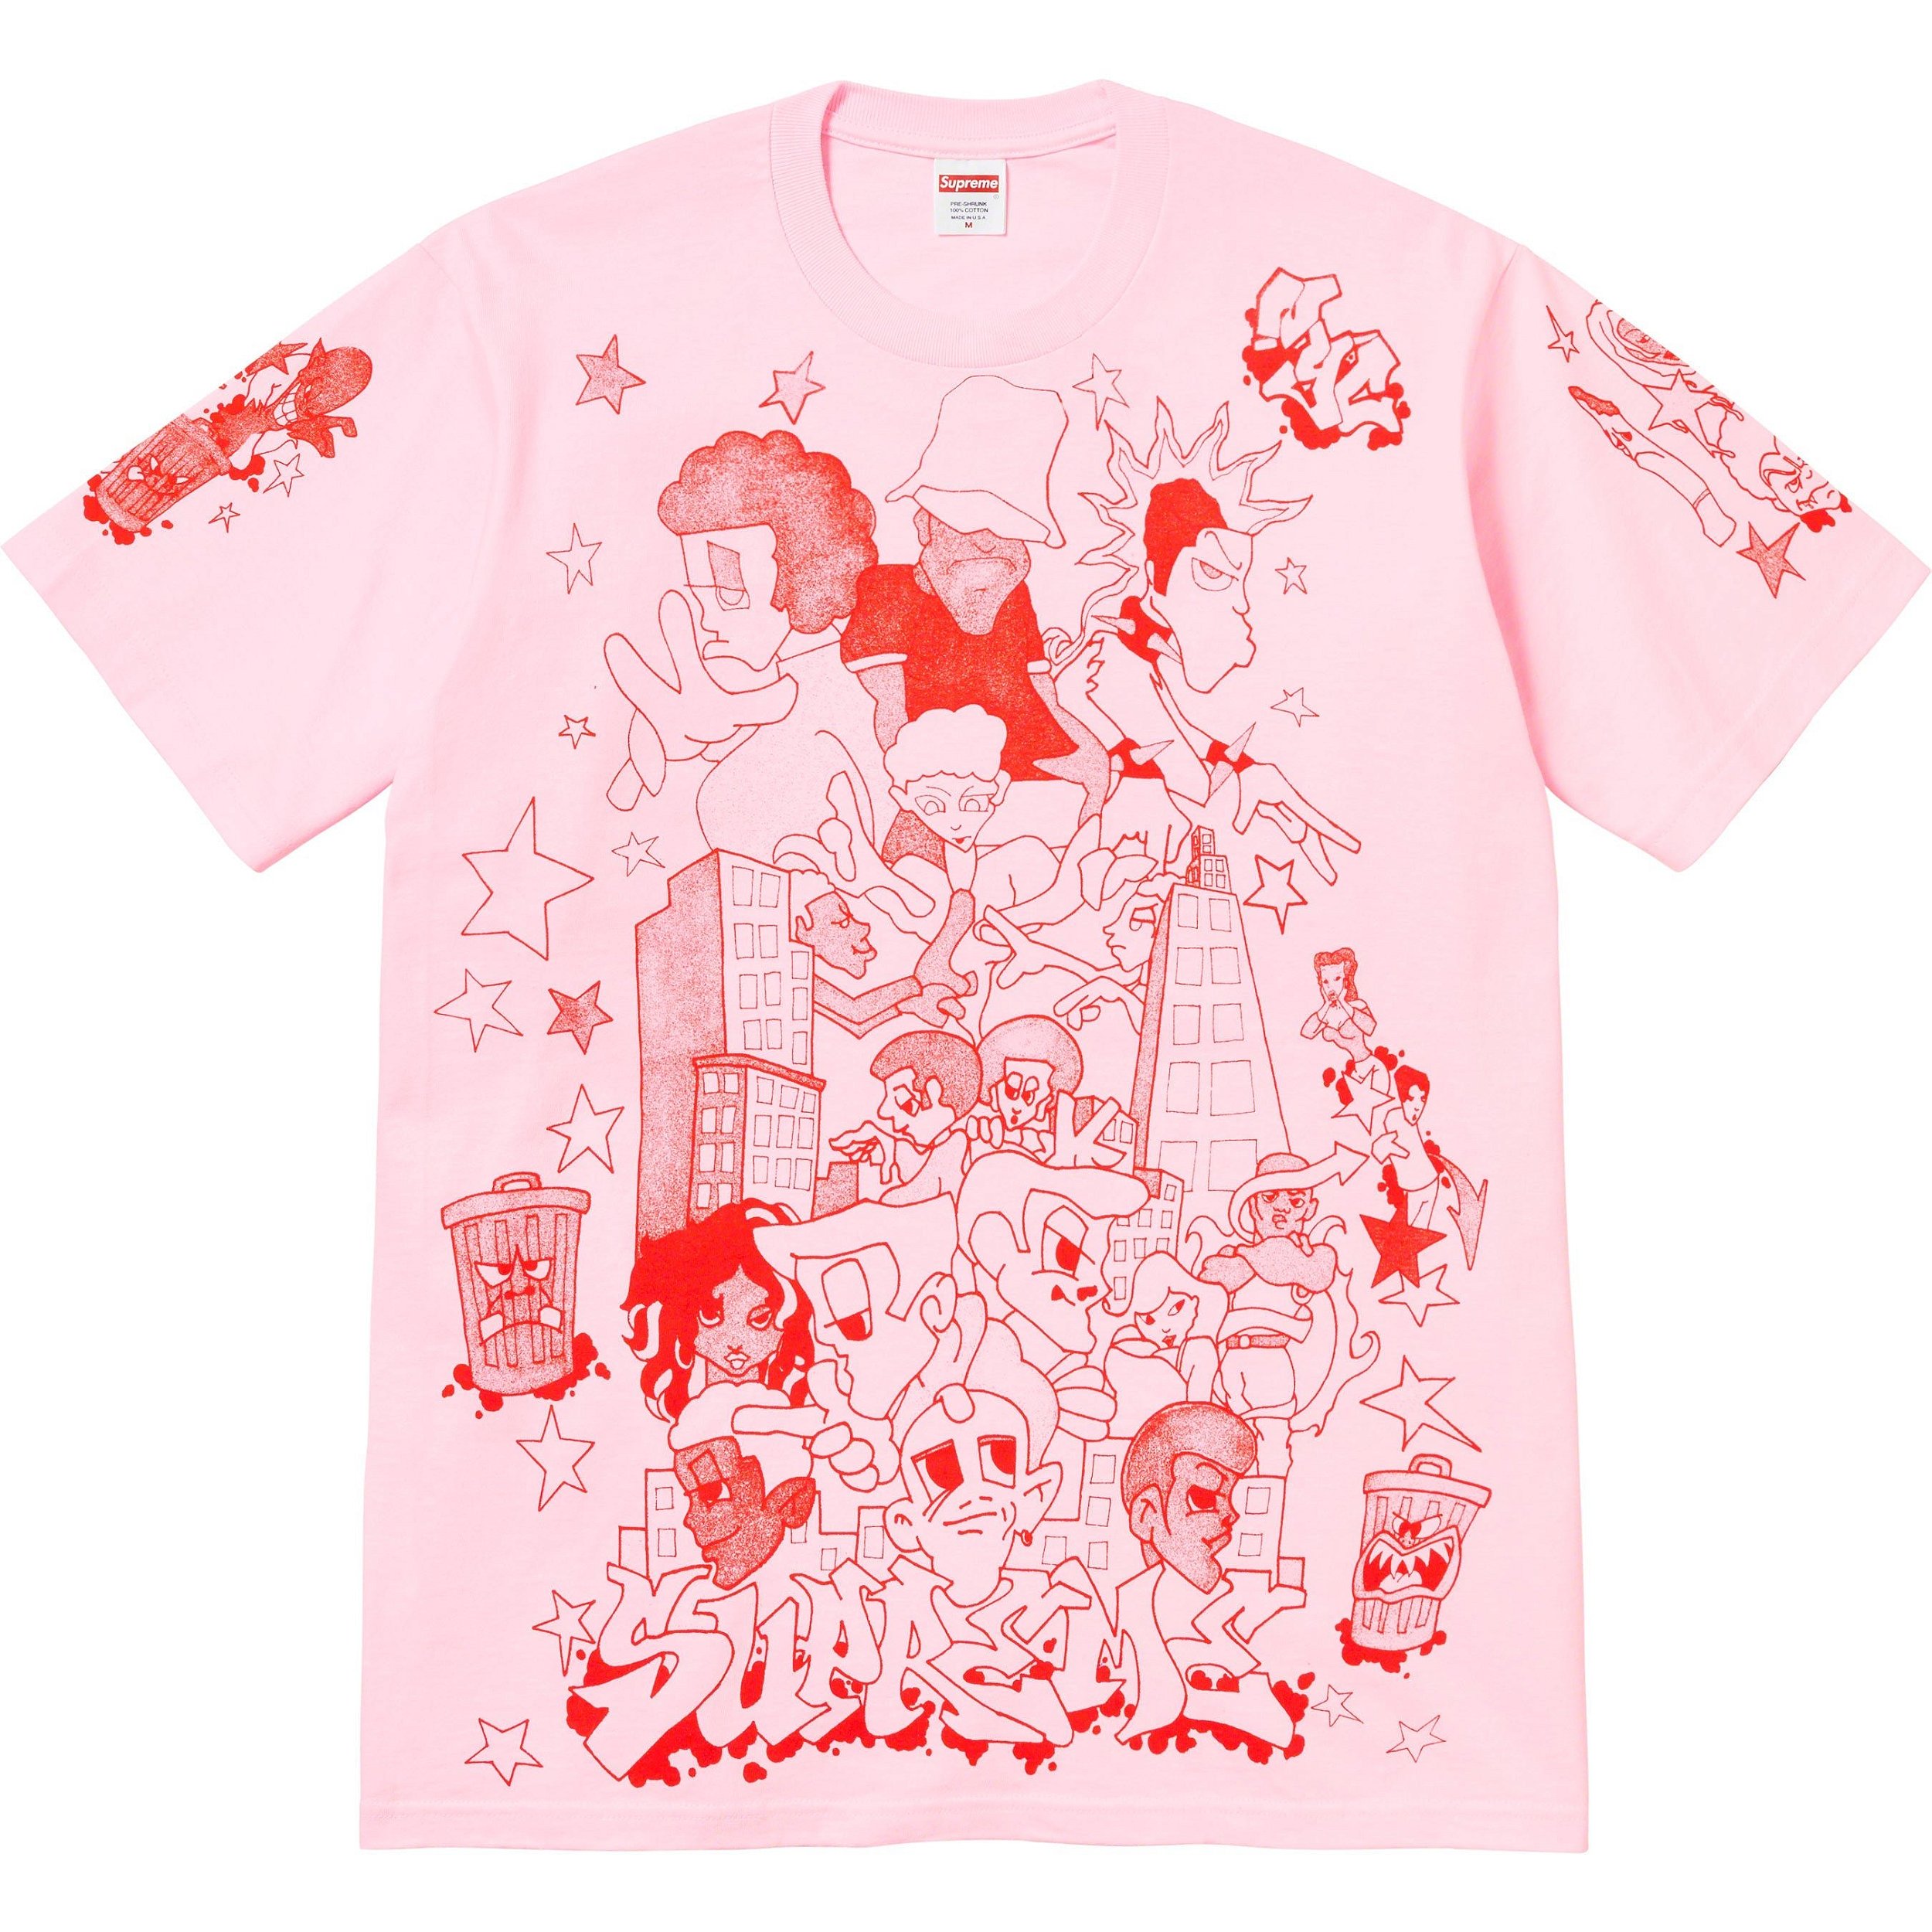 SUPREME - Camiseta Downtown "Rosa" -NOVO- - Pineapple Co. | 100% Autentico  | Itens Exclusivos e Limitados.